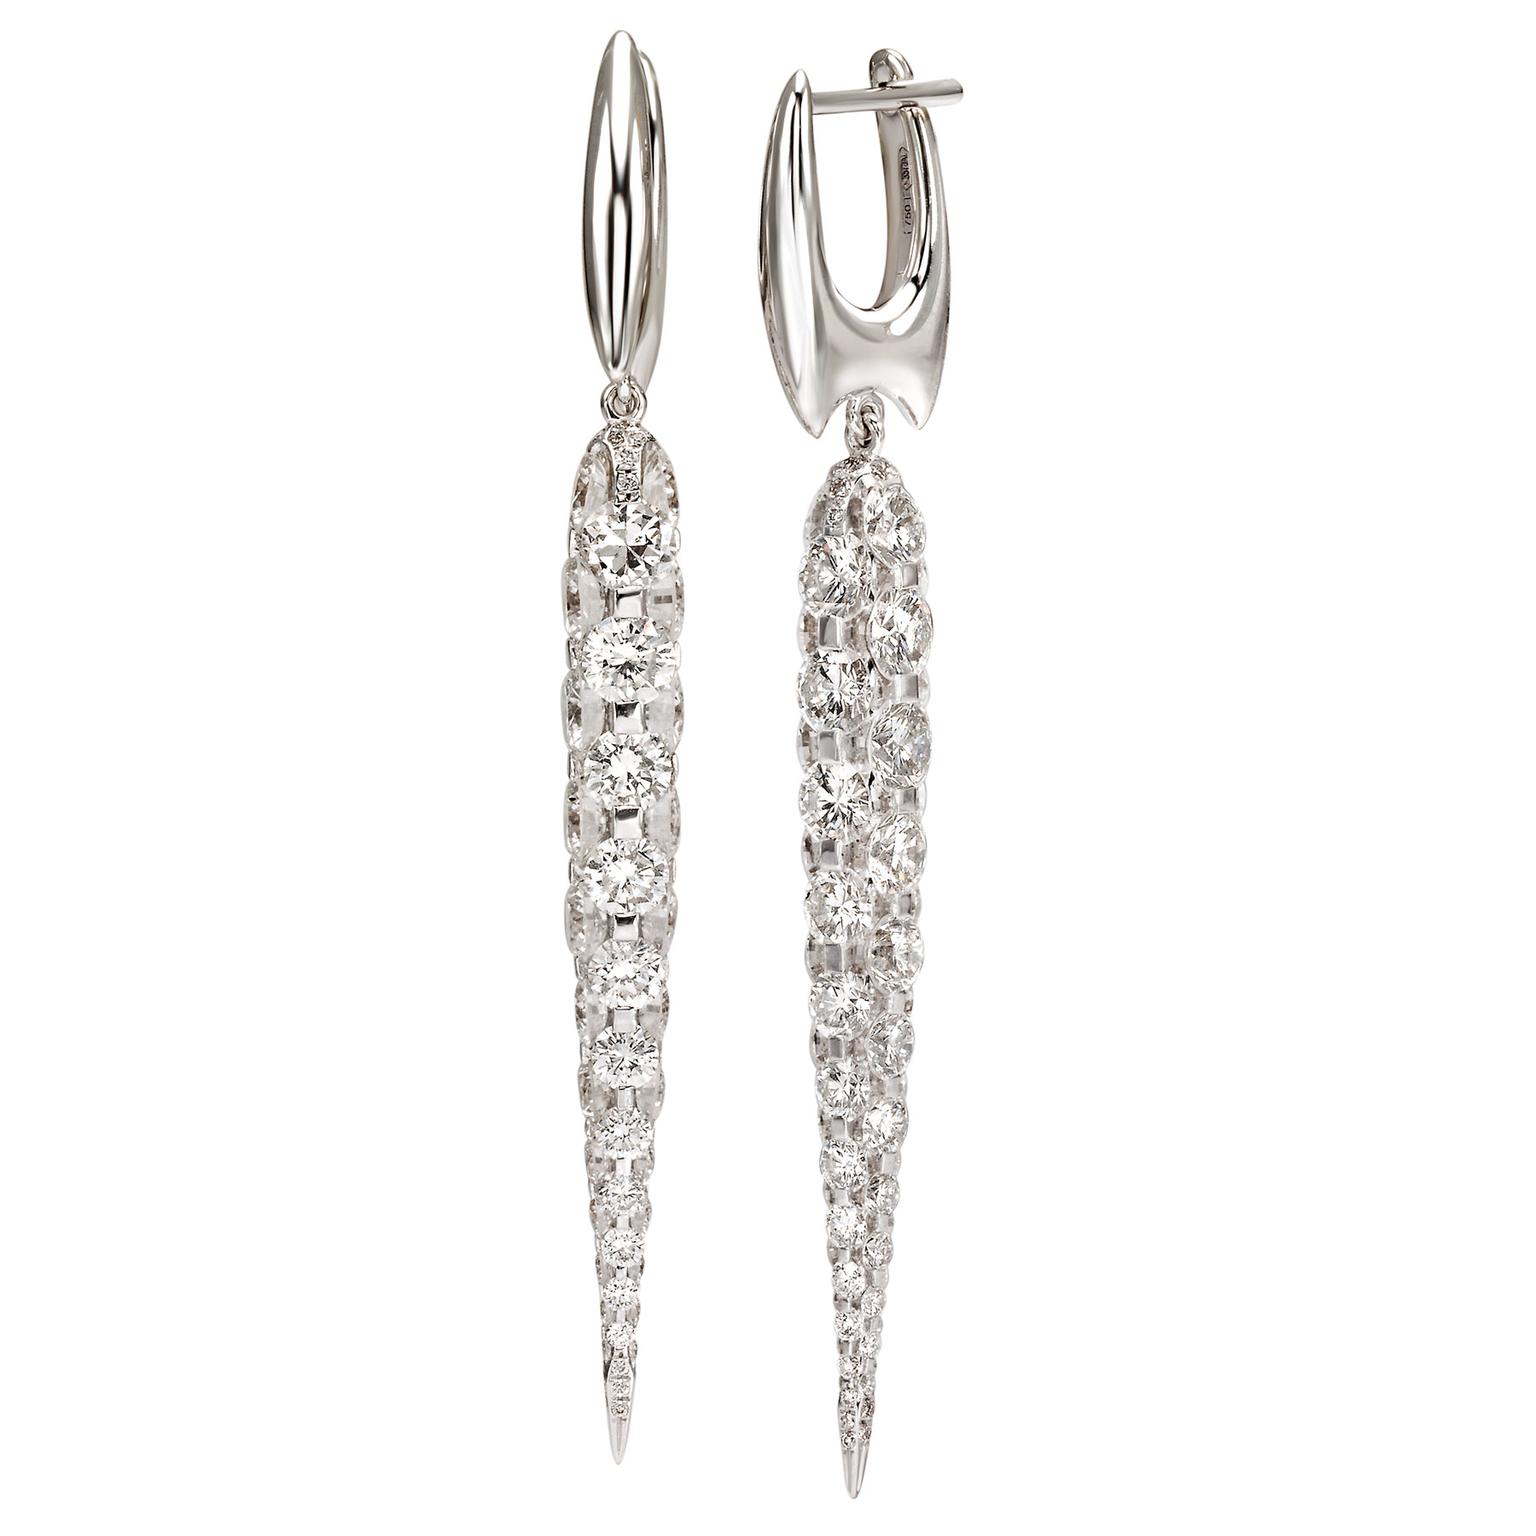 Boghossian Les Merveilles diamond drop earrings